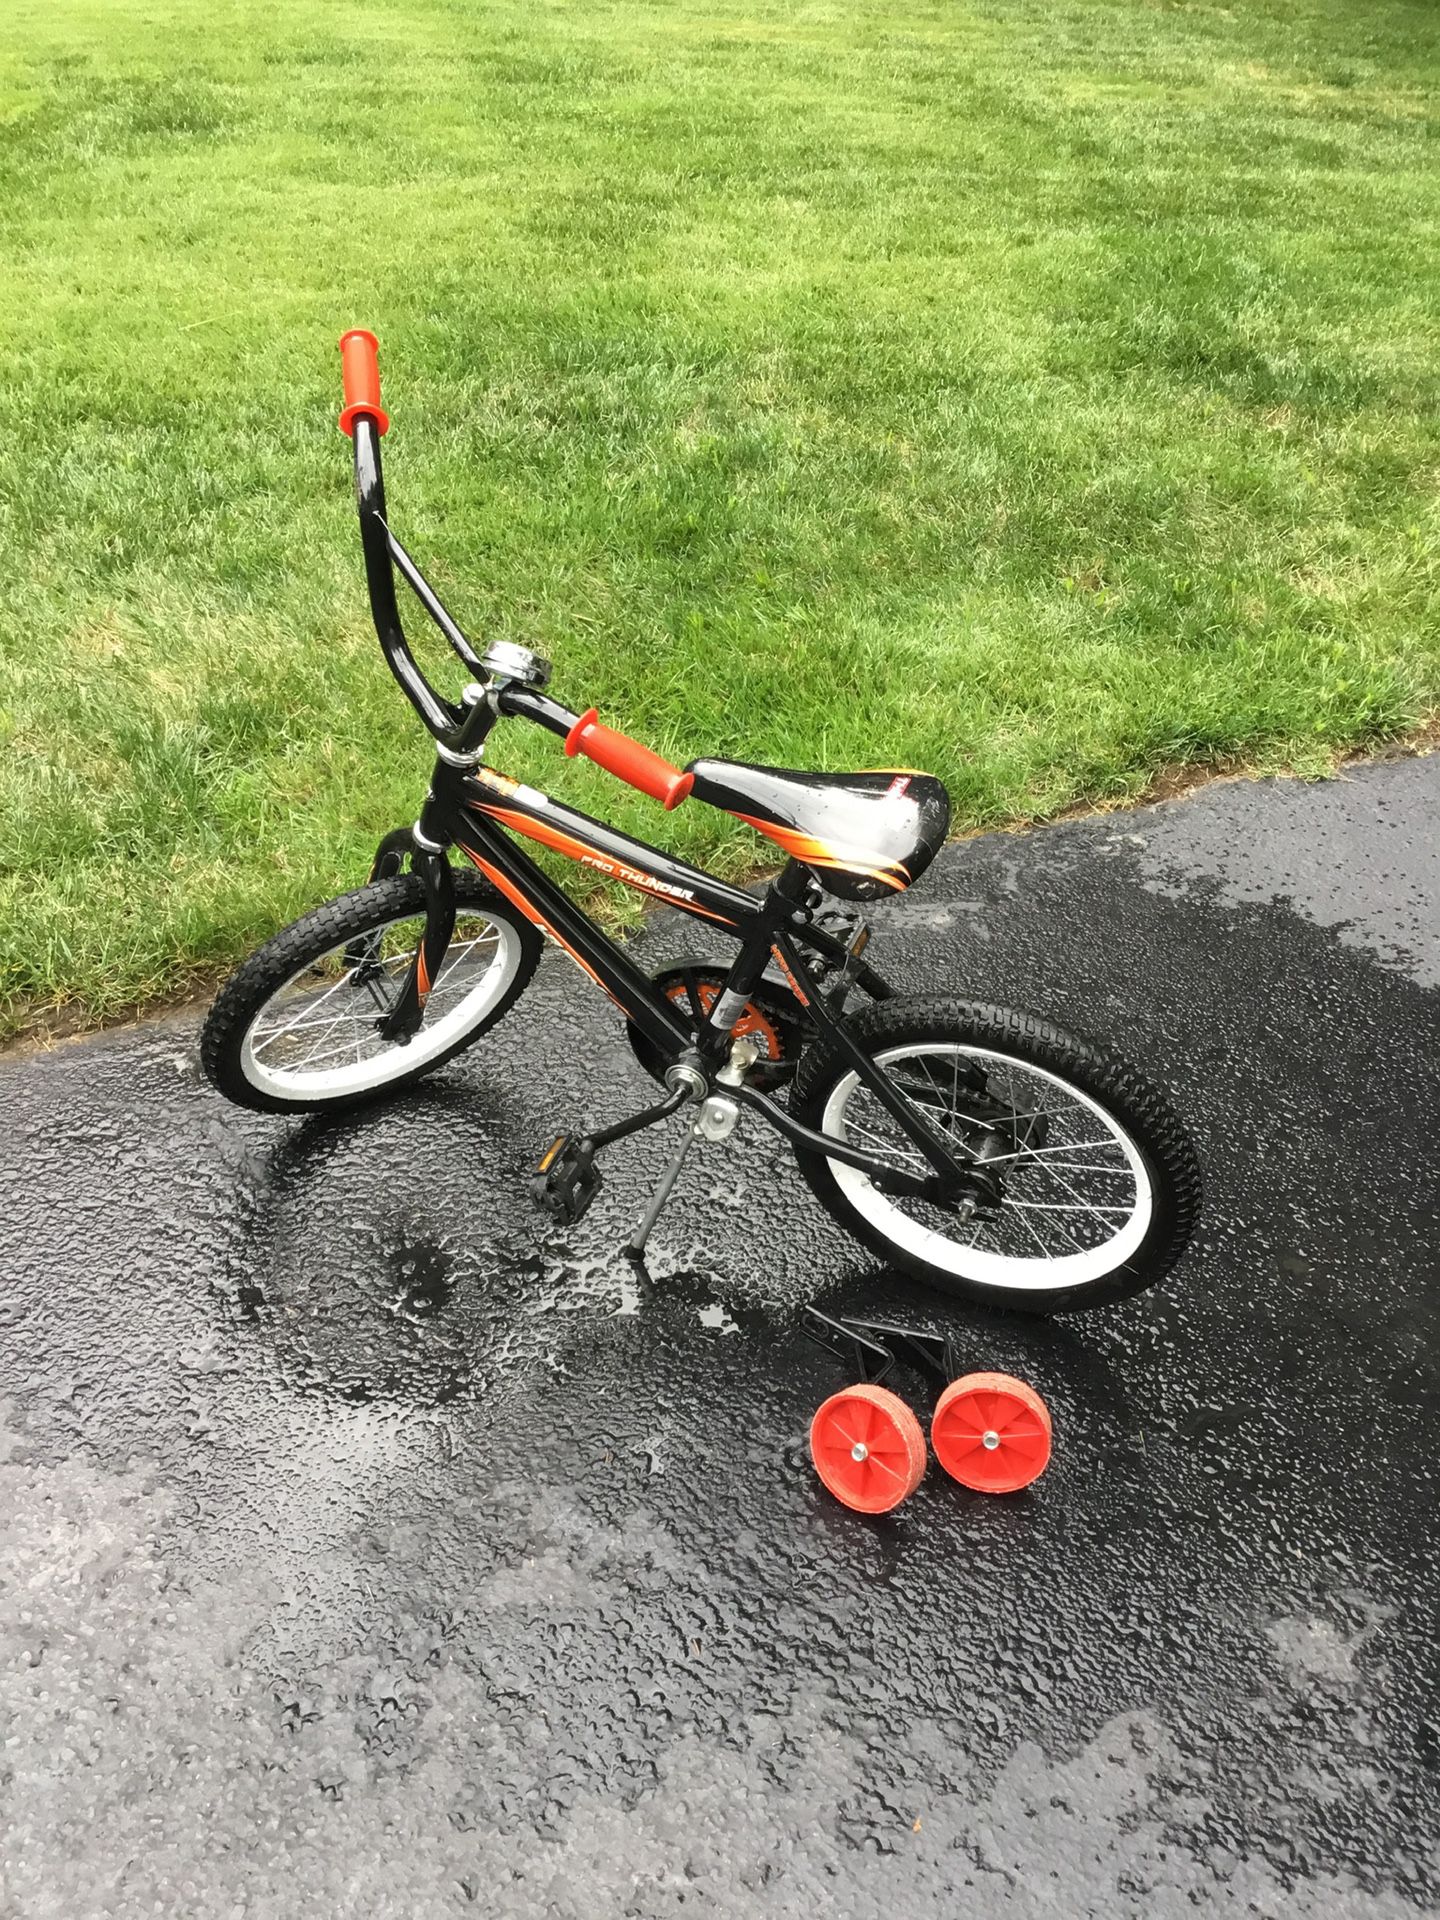 Boys 16” Huffy Dirt Bike with training wheels